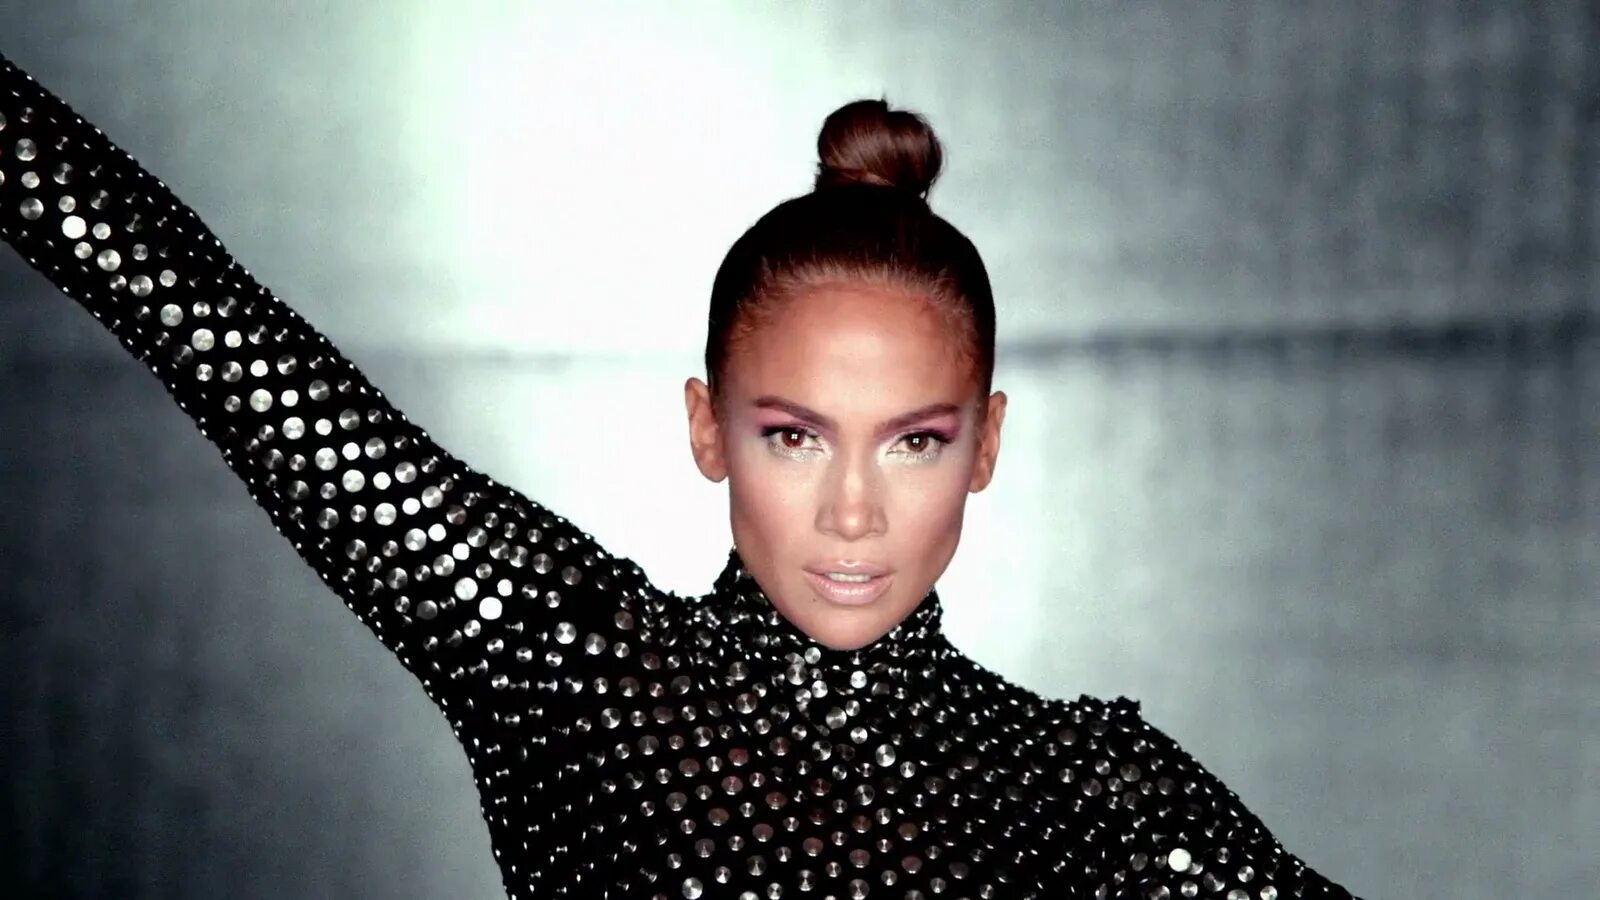 Jennifer Lopez Dance. Mooz Dance. Jennifer Lopez Dance again. Jennifer Lopez feat. Pitbull Dance again. Лопес танцует